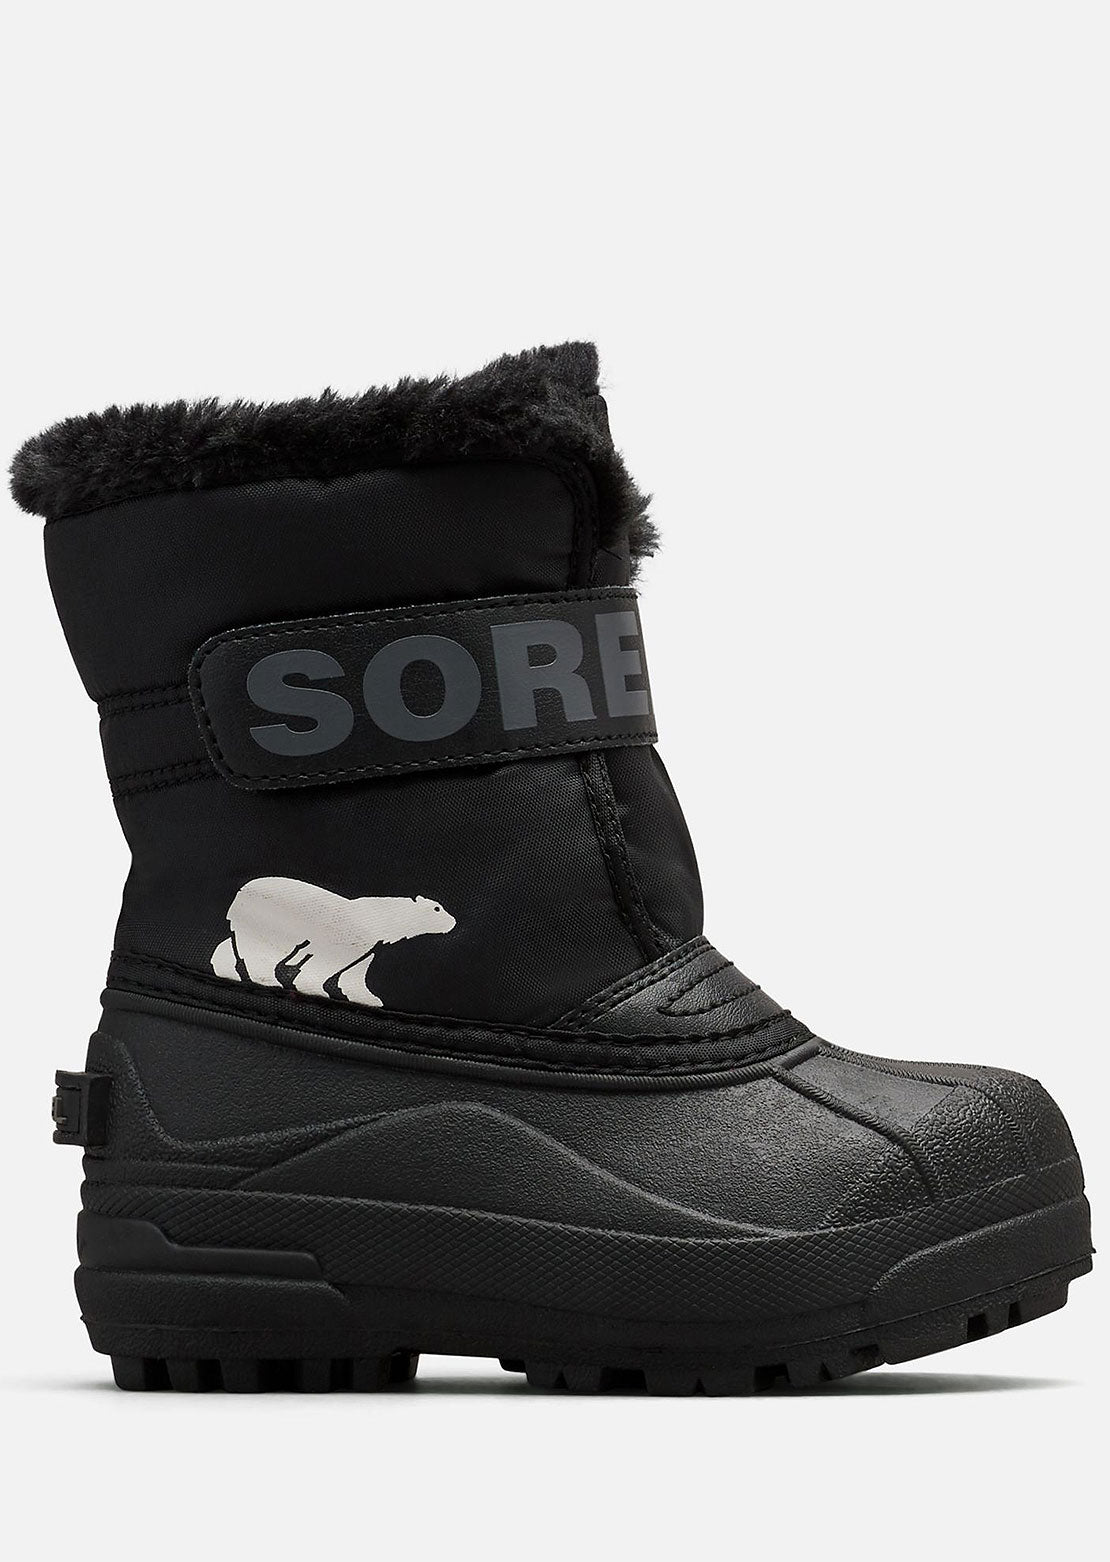 Sorel Infant Snow Commander Boots Black/Charcoal